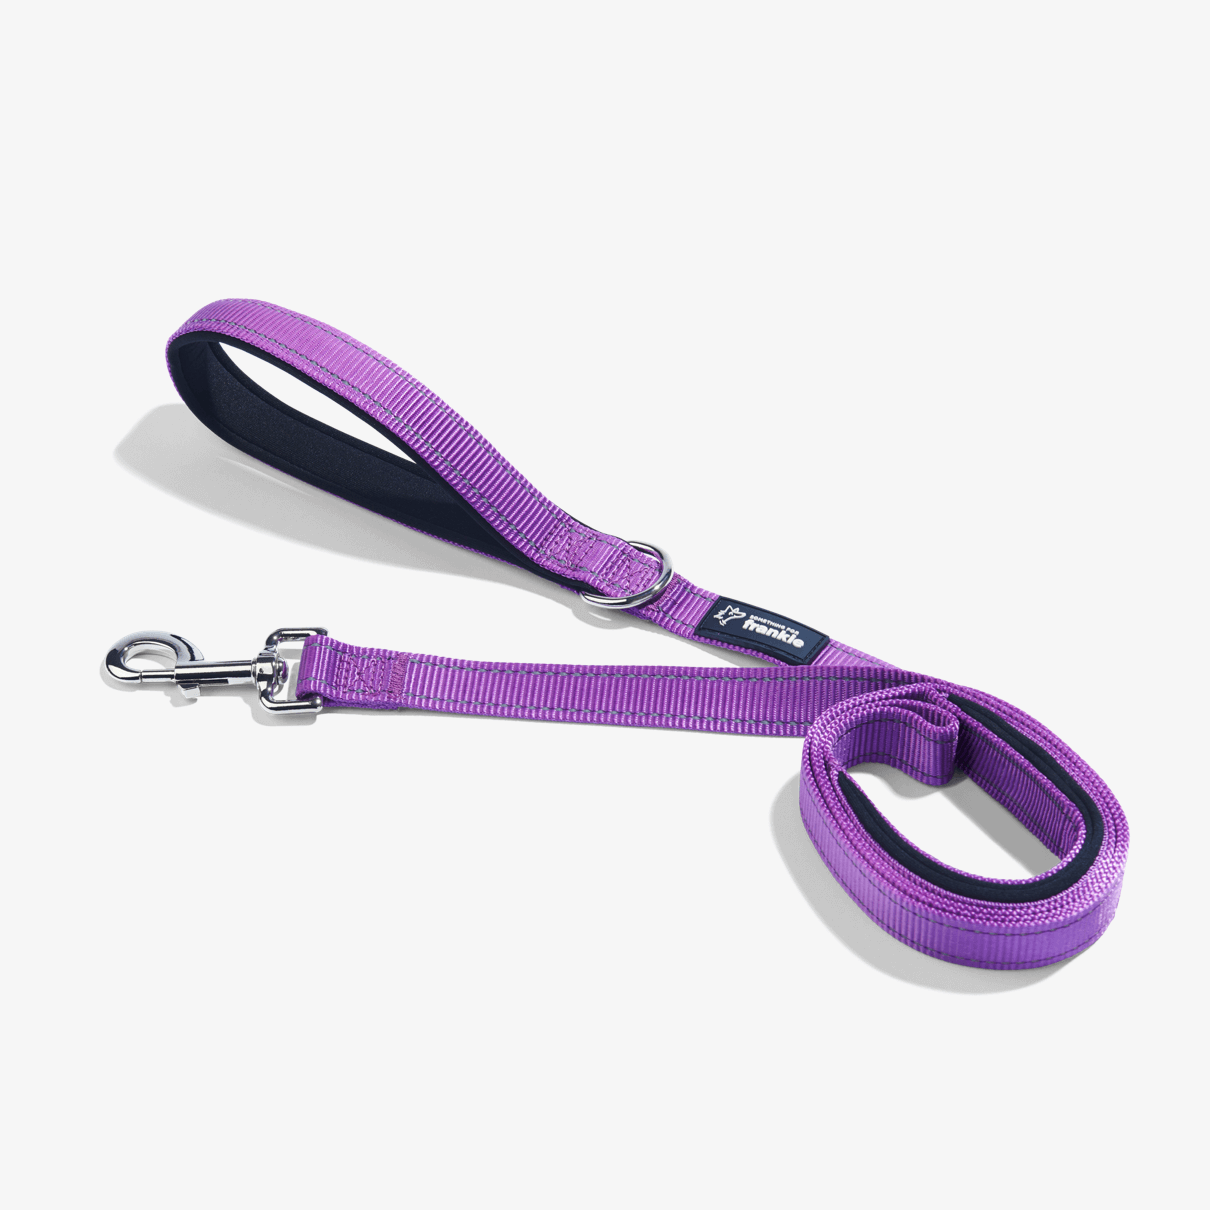 Violet total control dog leash showing padded handle